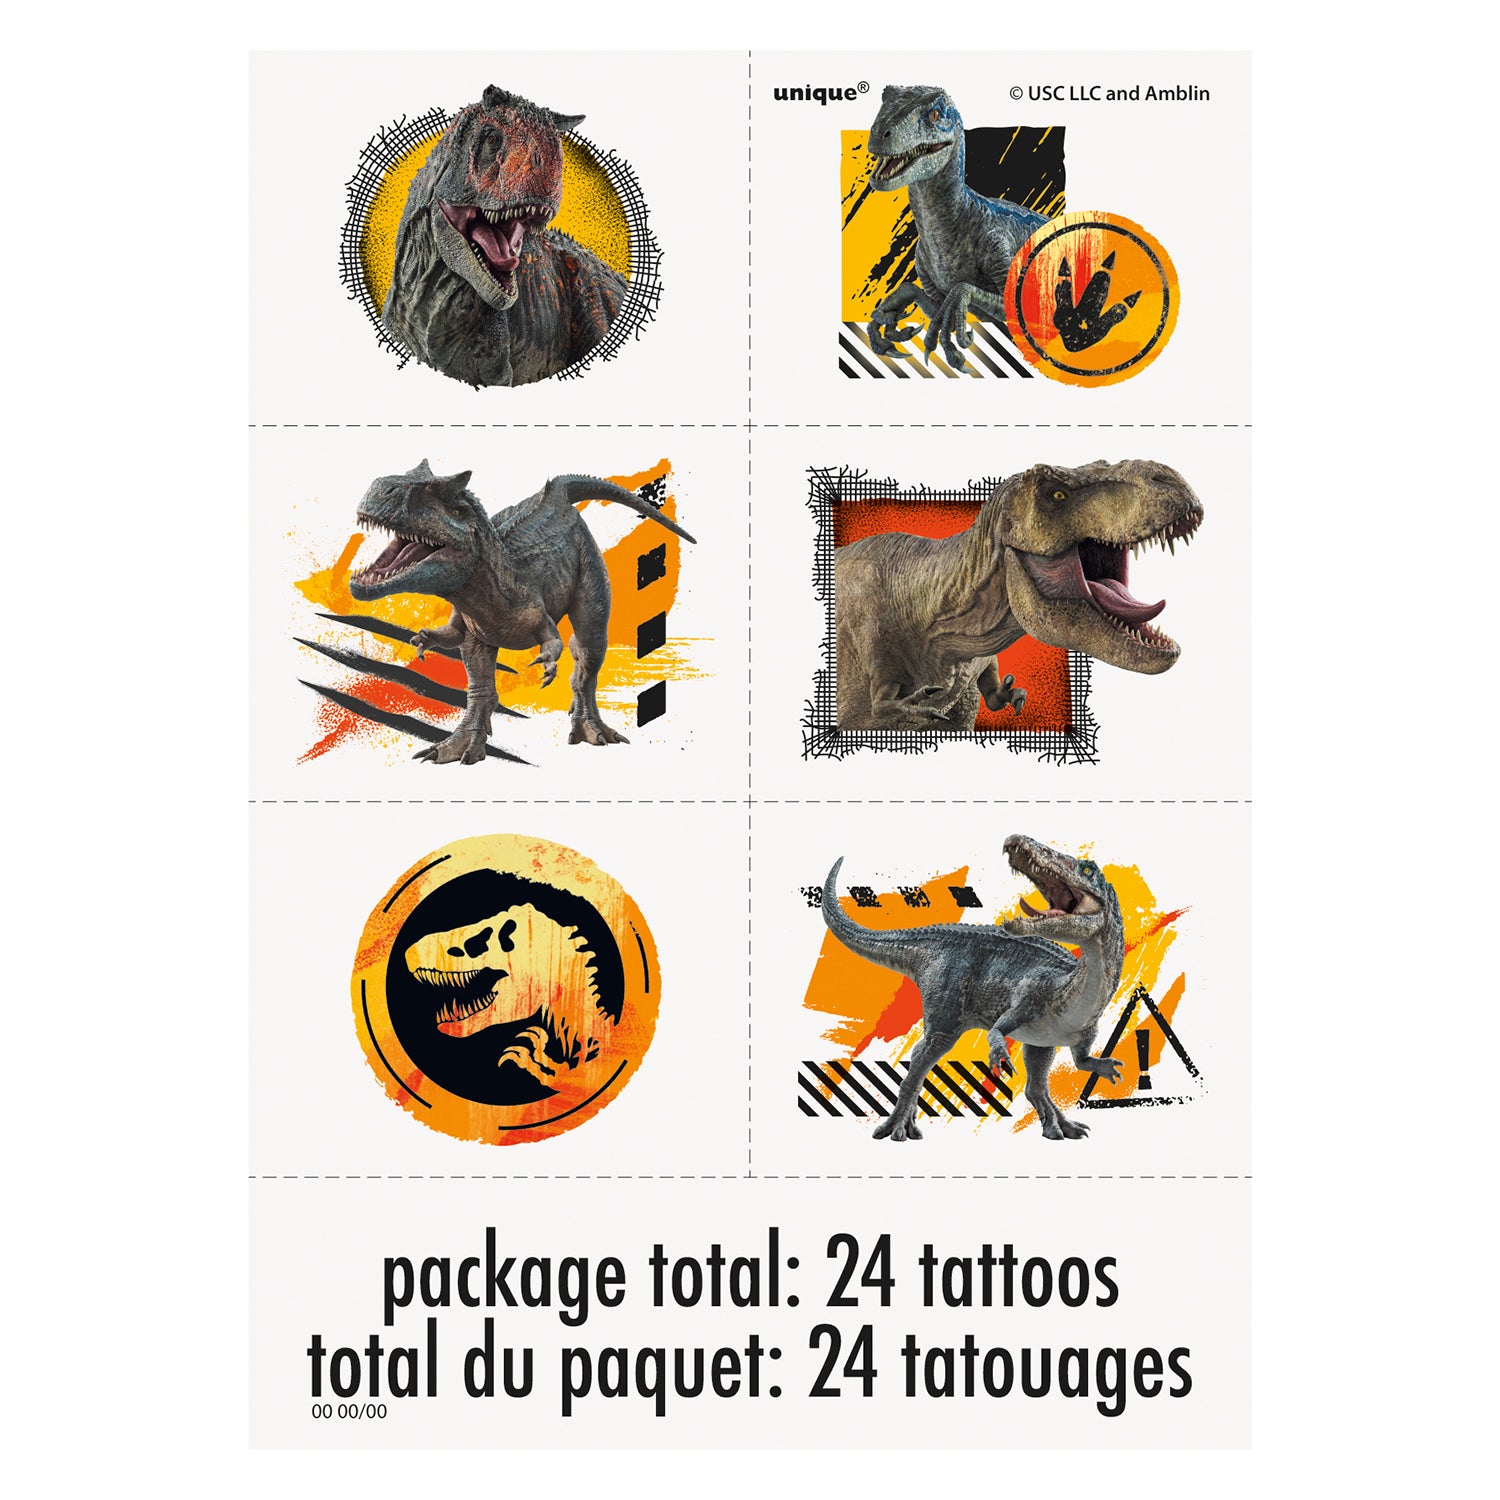 Jurassic World Dominion Temporary Tattoo Sheets [4 per Pack]